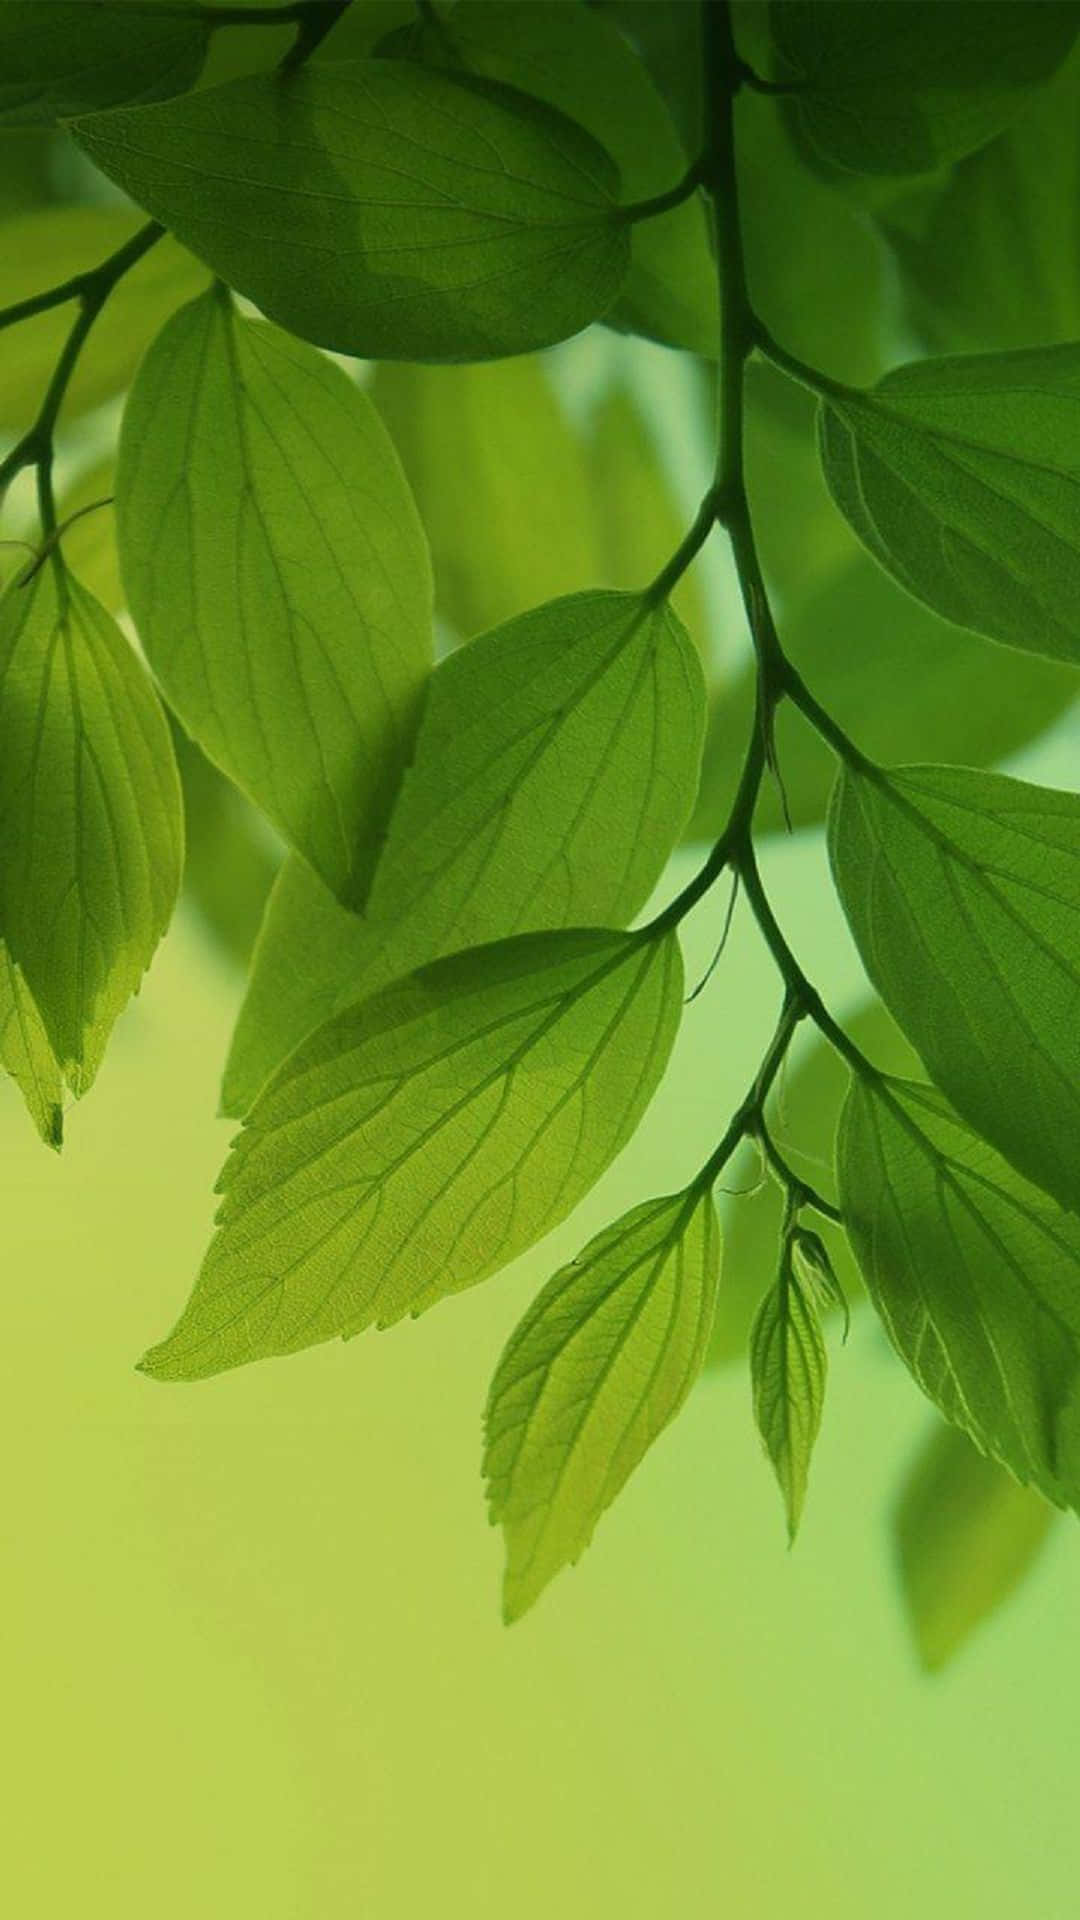 Eco-friendly smartphone on green leaf background